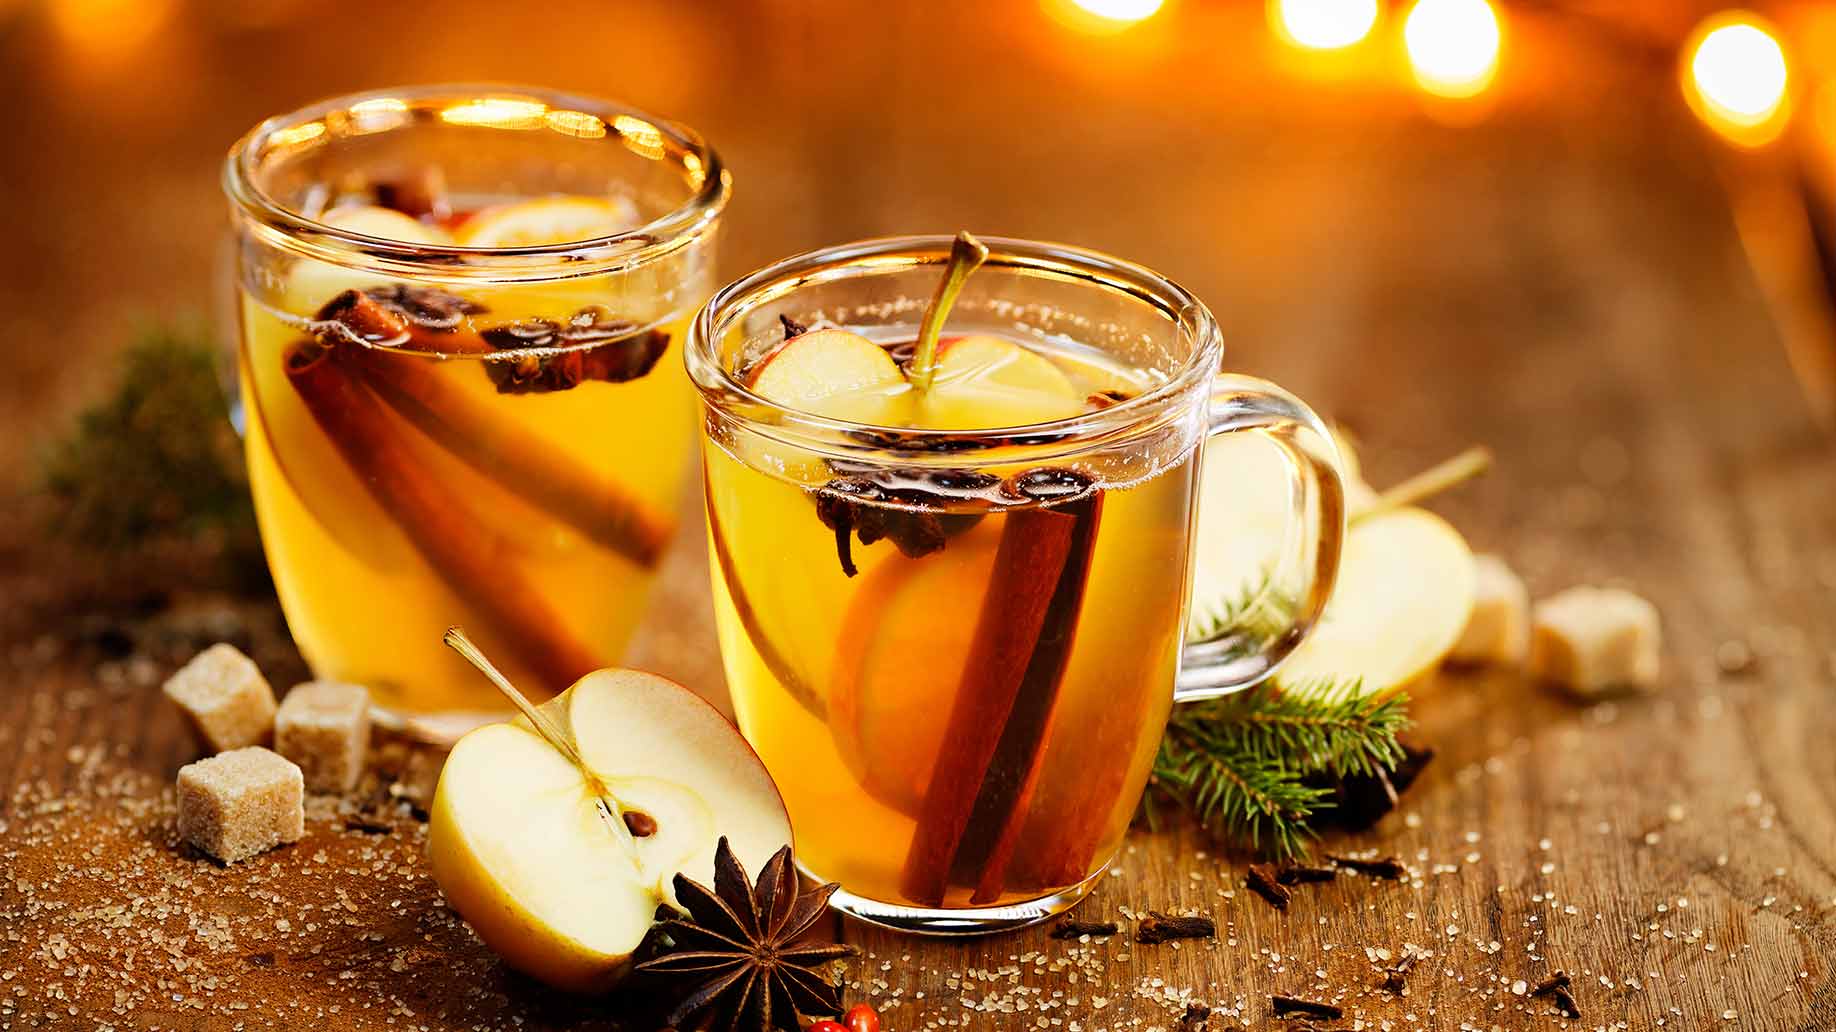 http://www.remediesforme.com/wp-content/uploads/2015/12/apple-cider-vinegar-ways-to-use-enjoy-fresh-apples-drink.jpg